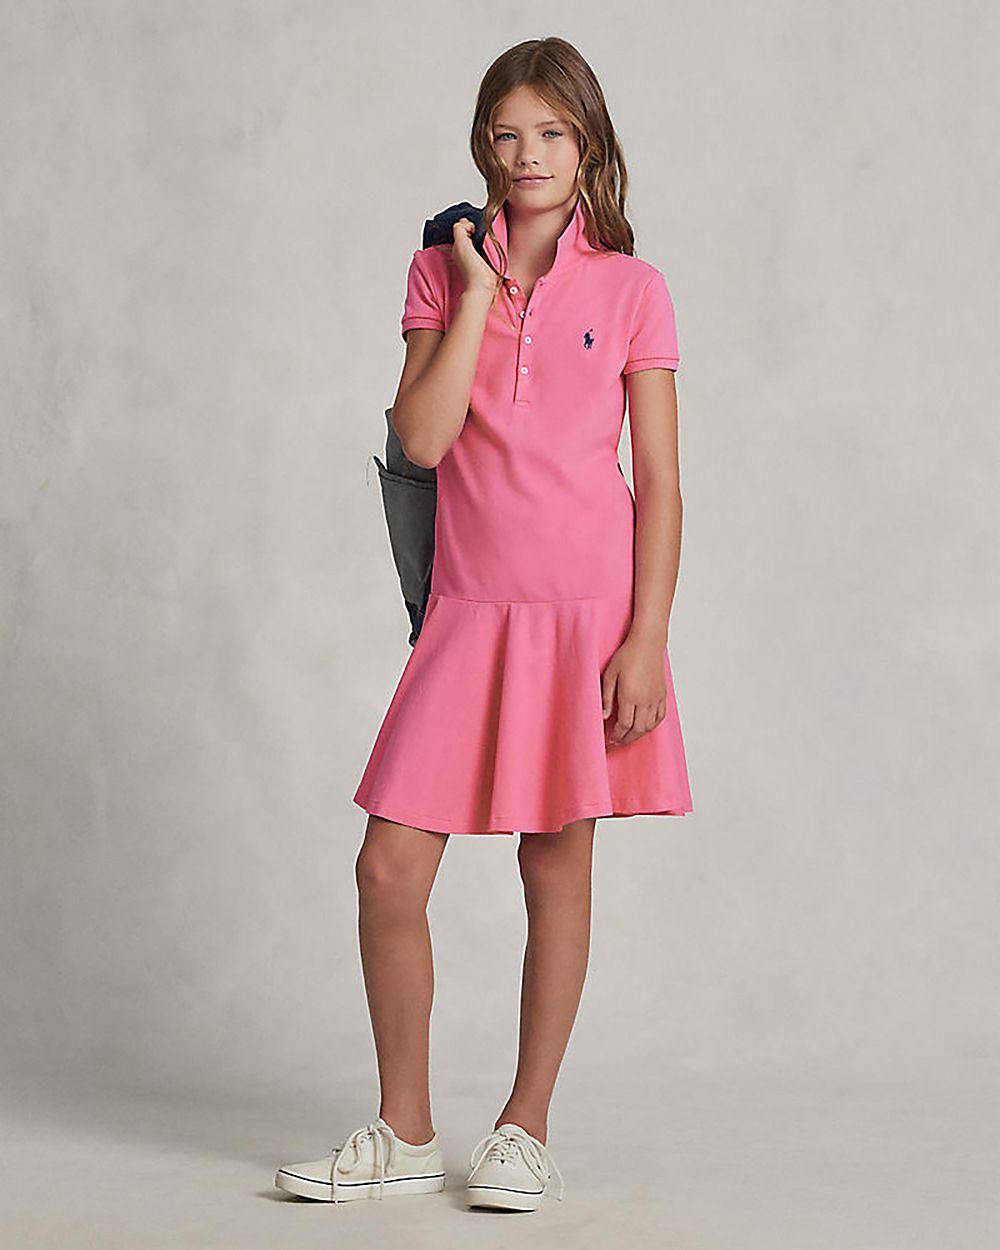 Ralph Lauren Girls' Polo Dress - Little Kid, Big Kid【美国@105